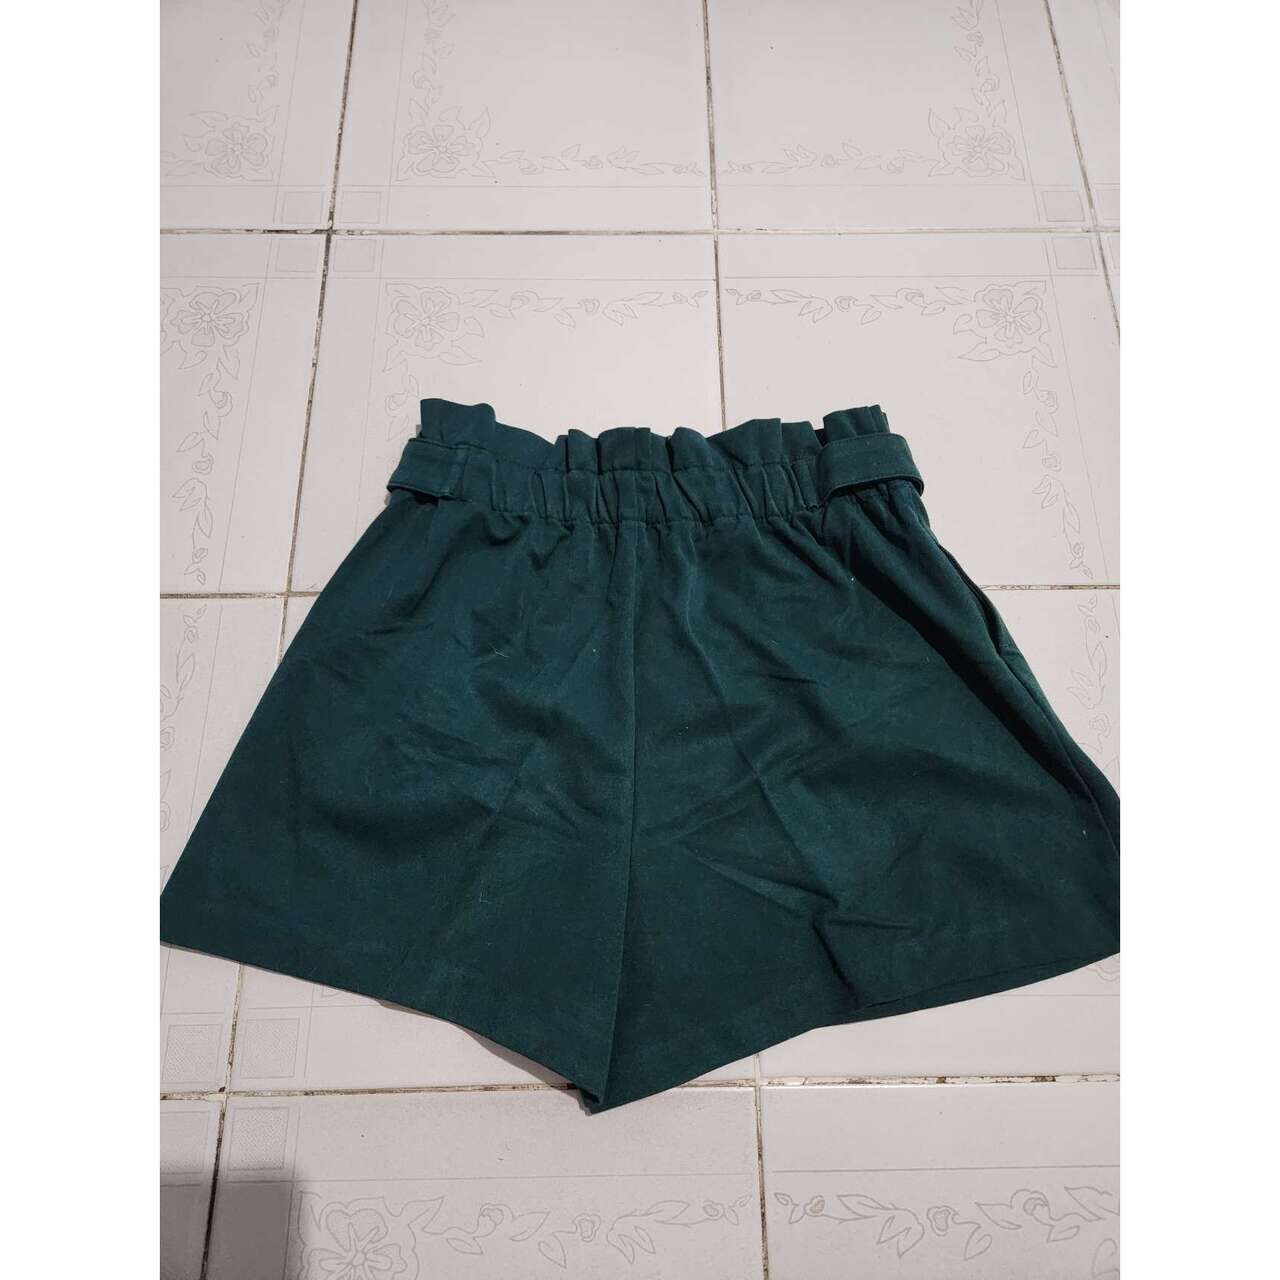 Zara Emerald Short Pants